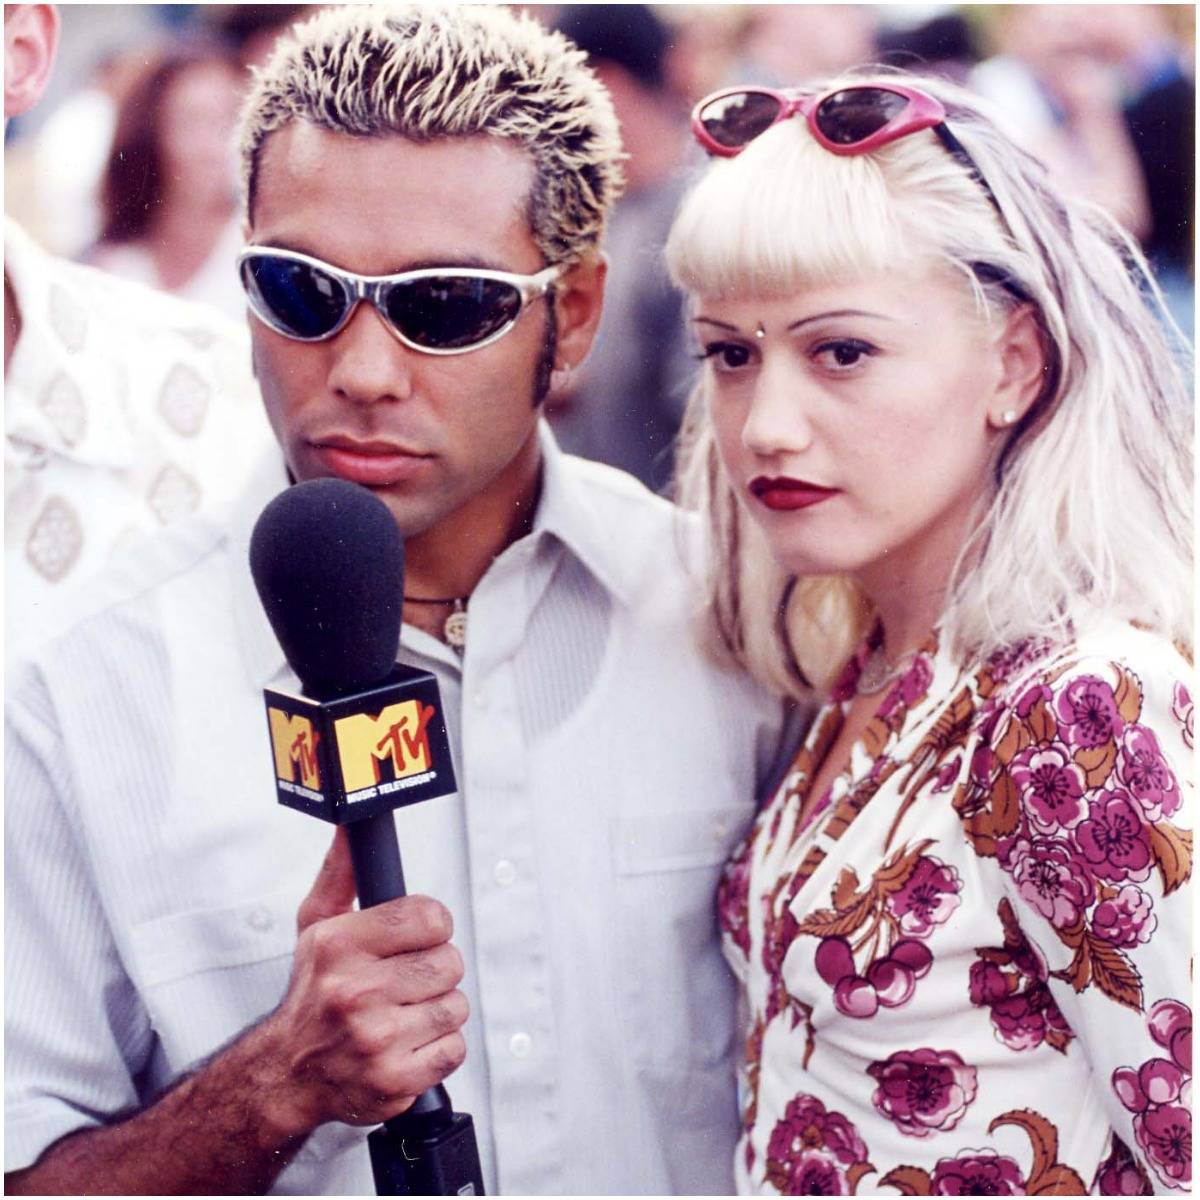 Gwen Stefani and boyfriend Tony Kanal